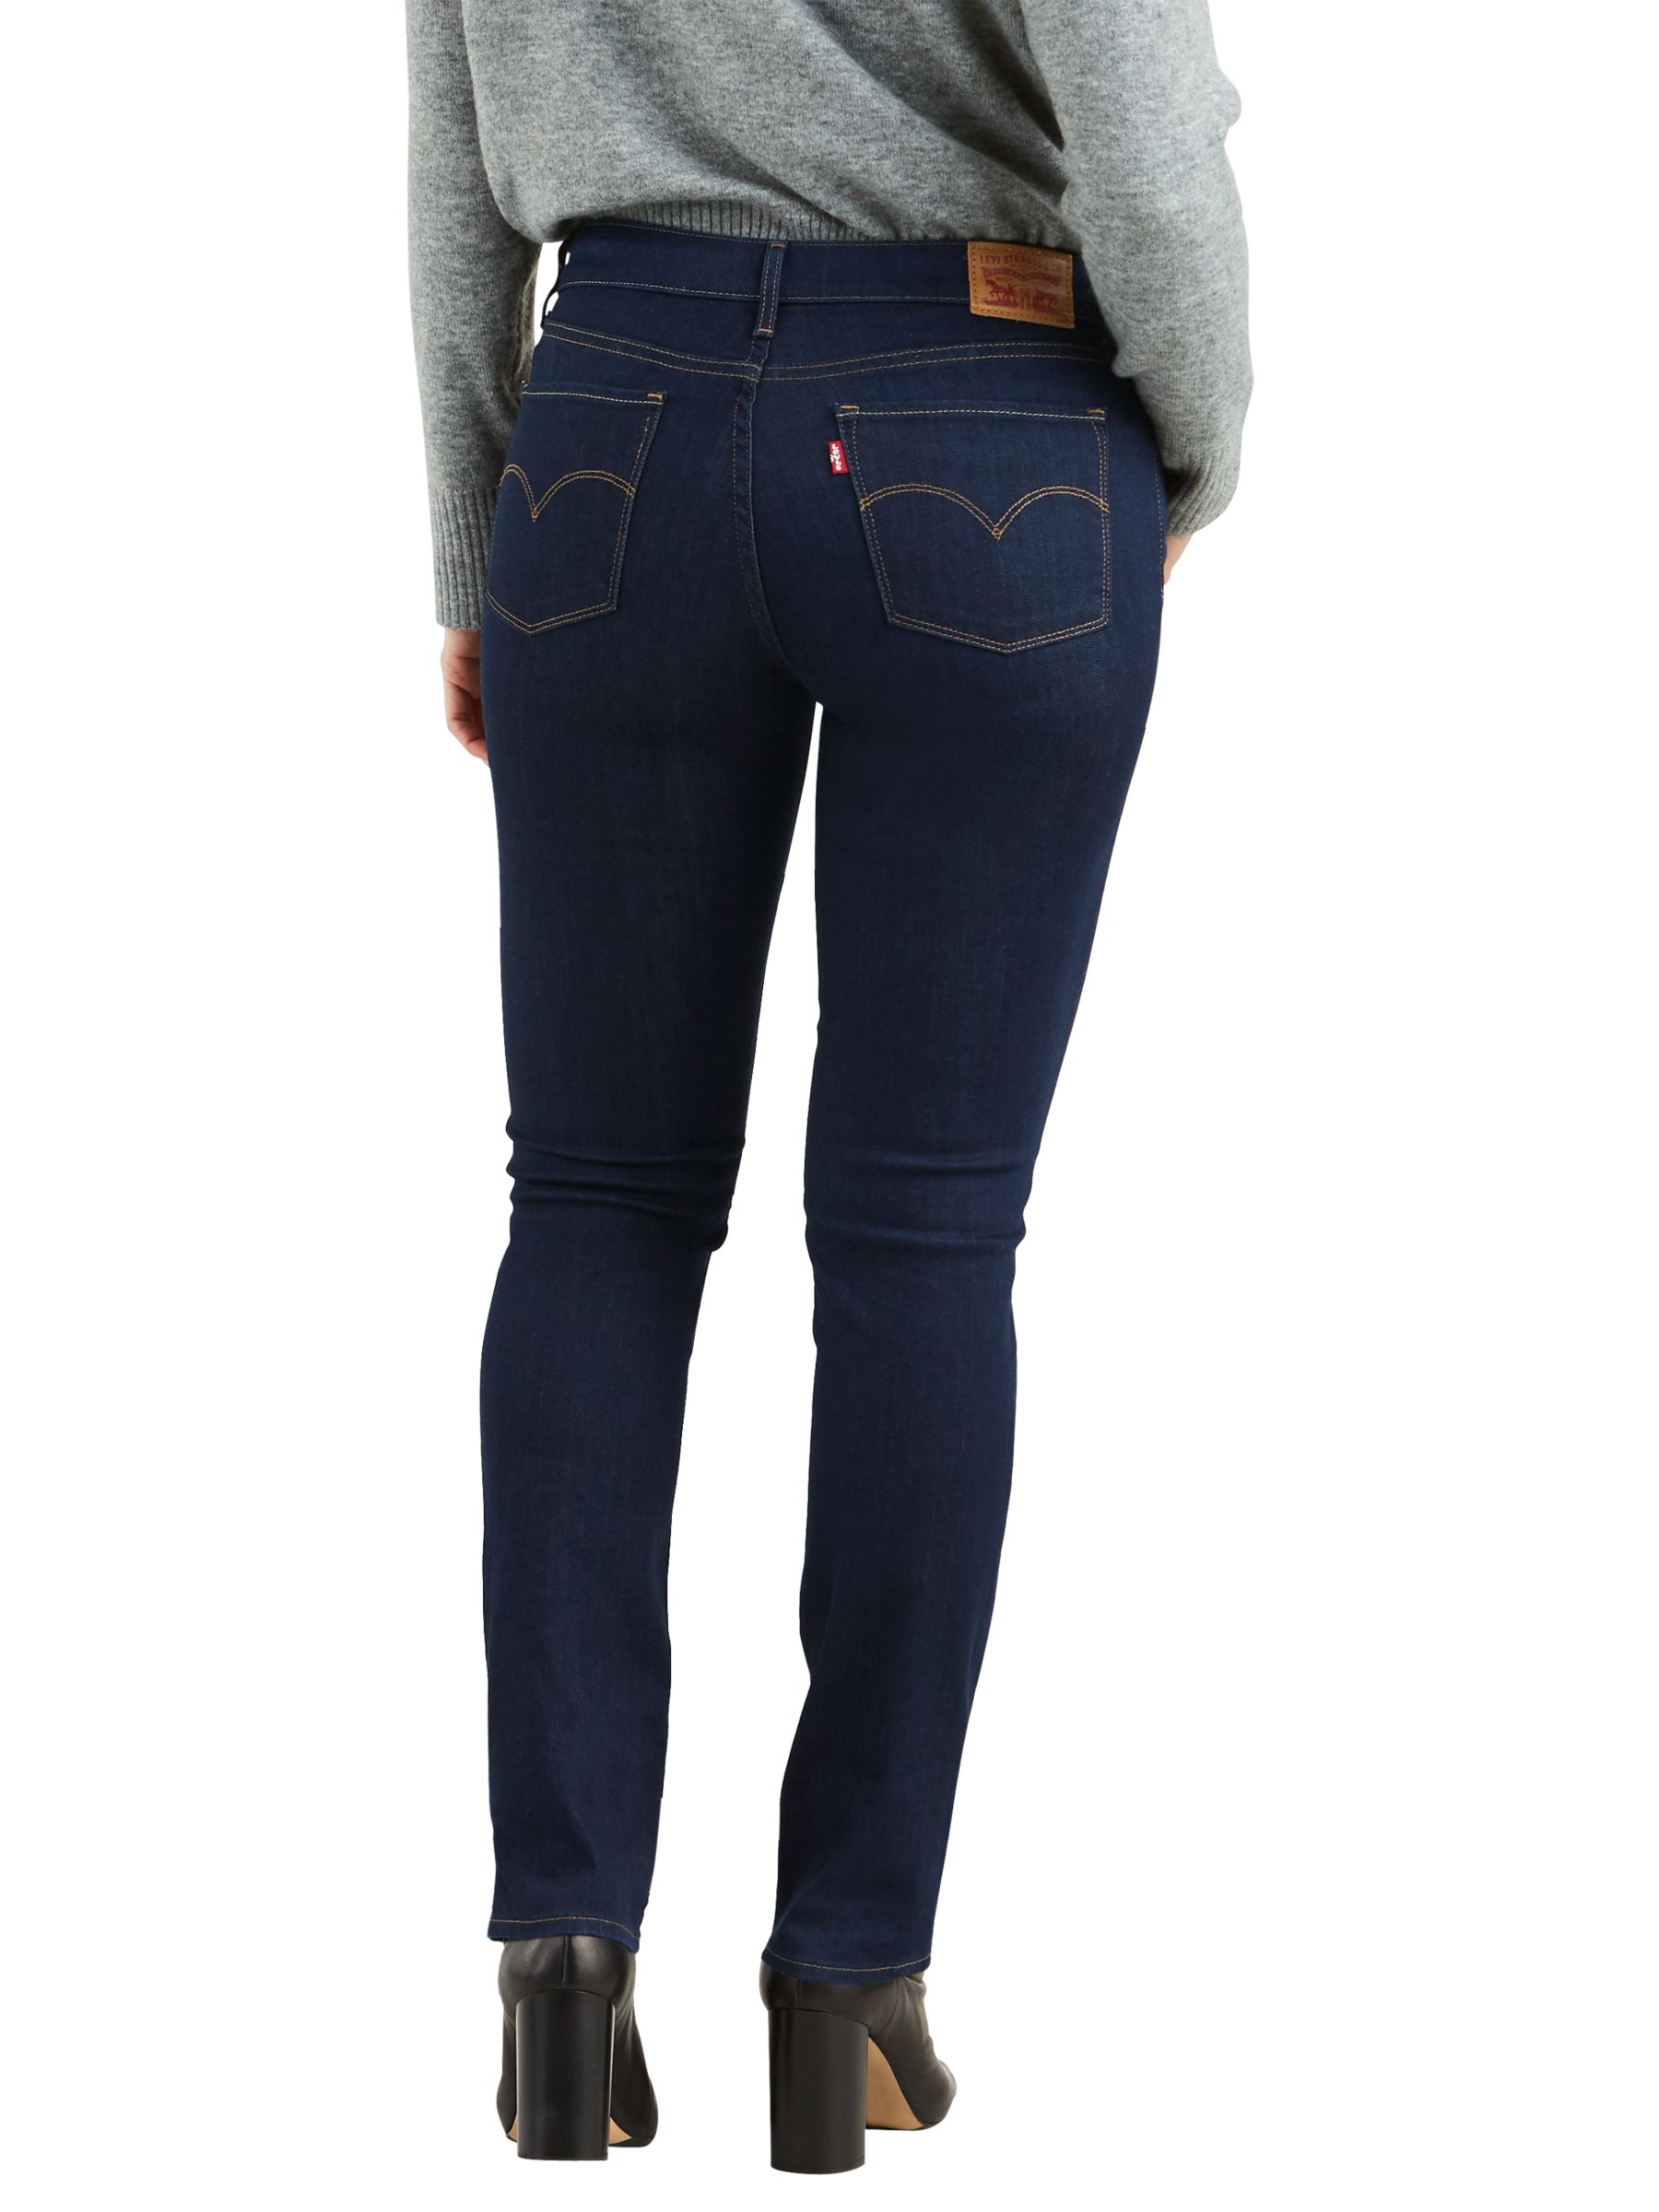 levi's 712 womens jeans